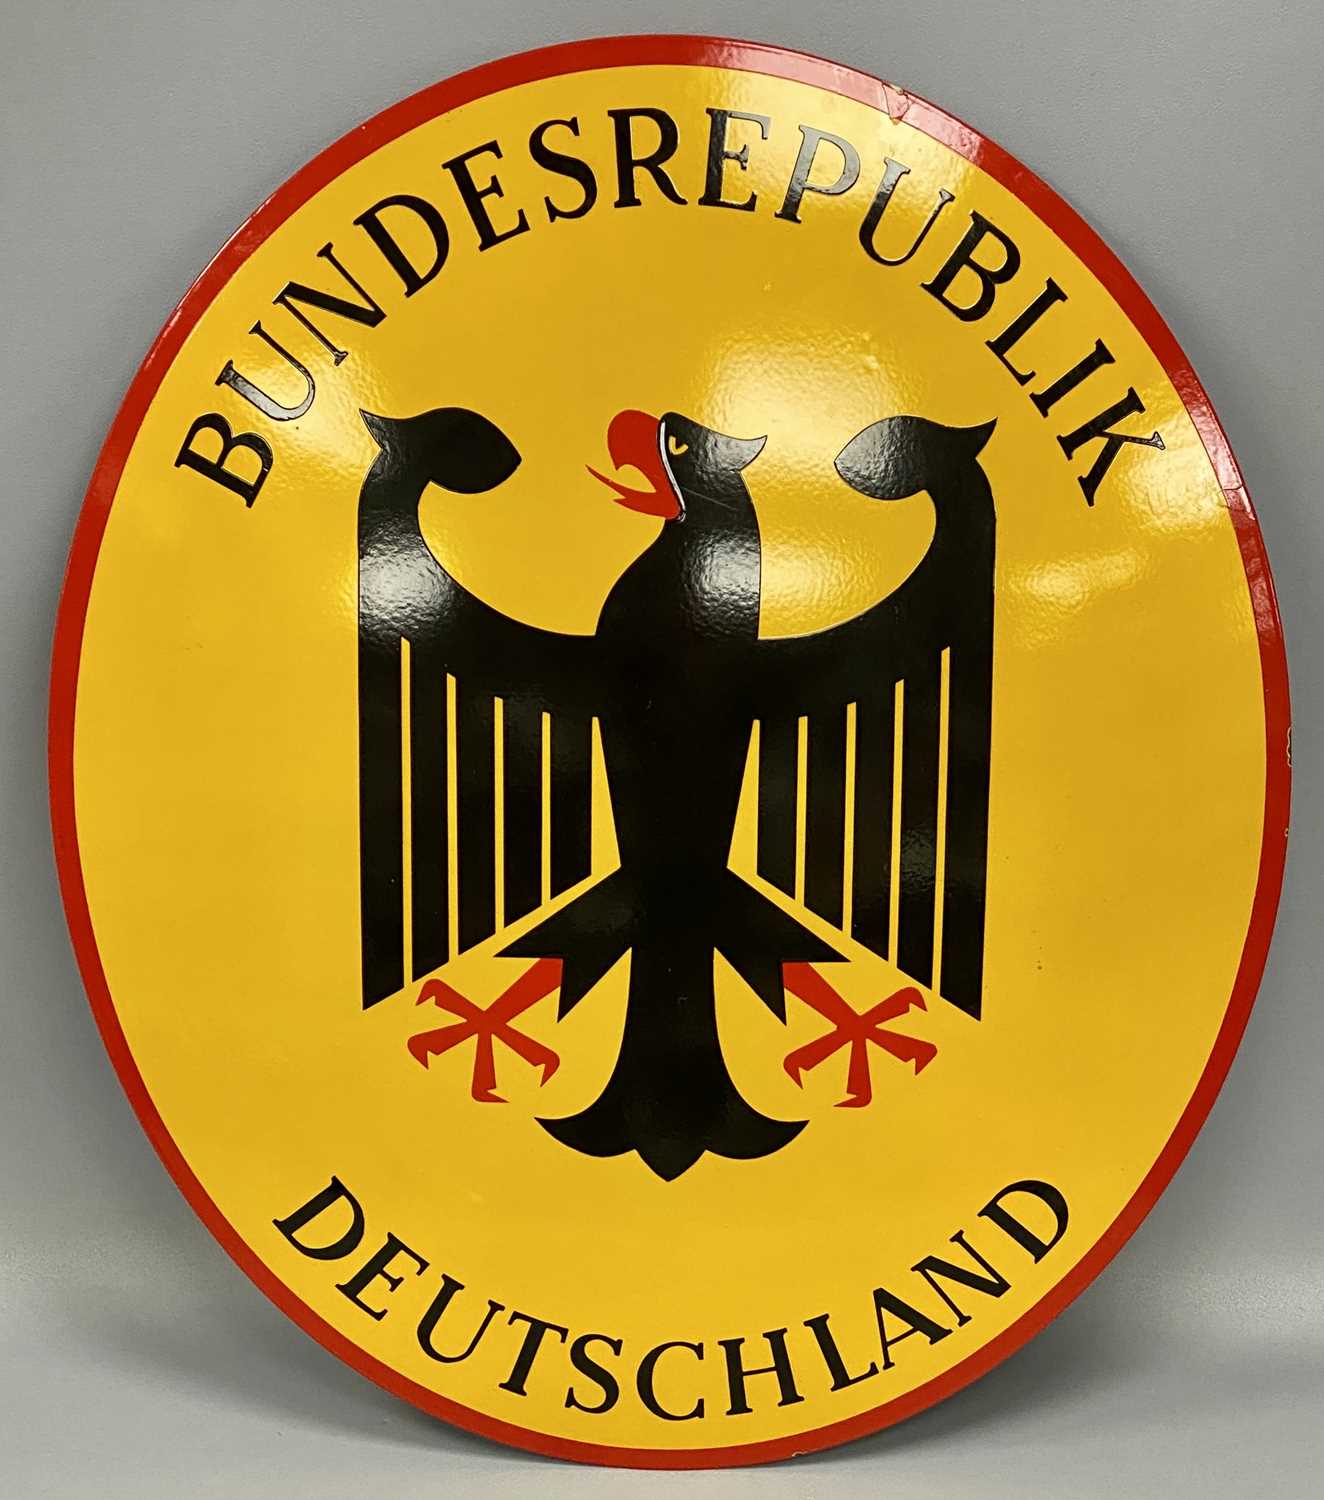 BUNDESREPUBLIK DEUTSCHLAND ENAMEL BORDER SIGN, convex oval format, black and red on yellow ground,